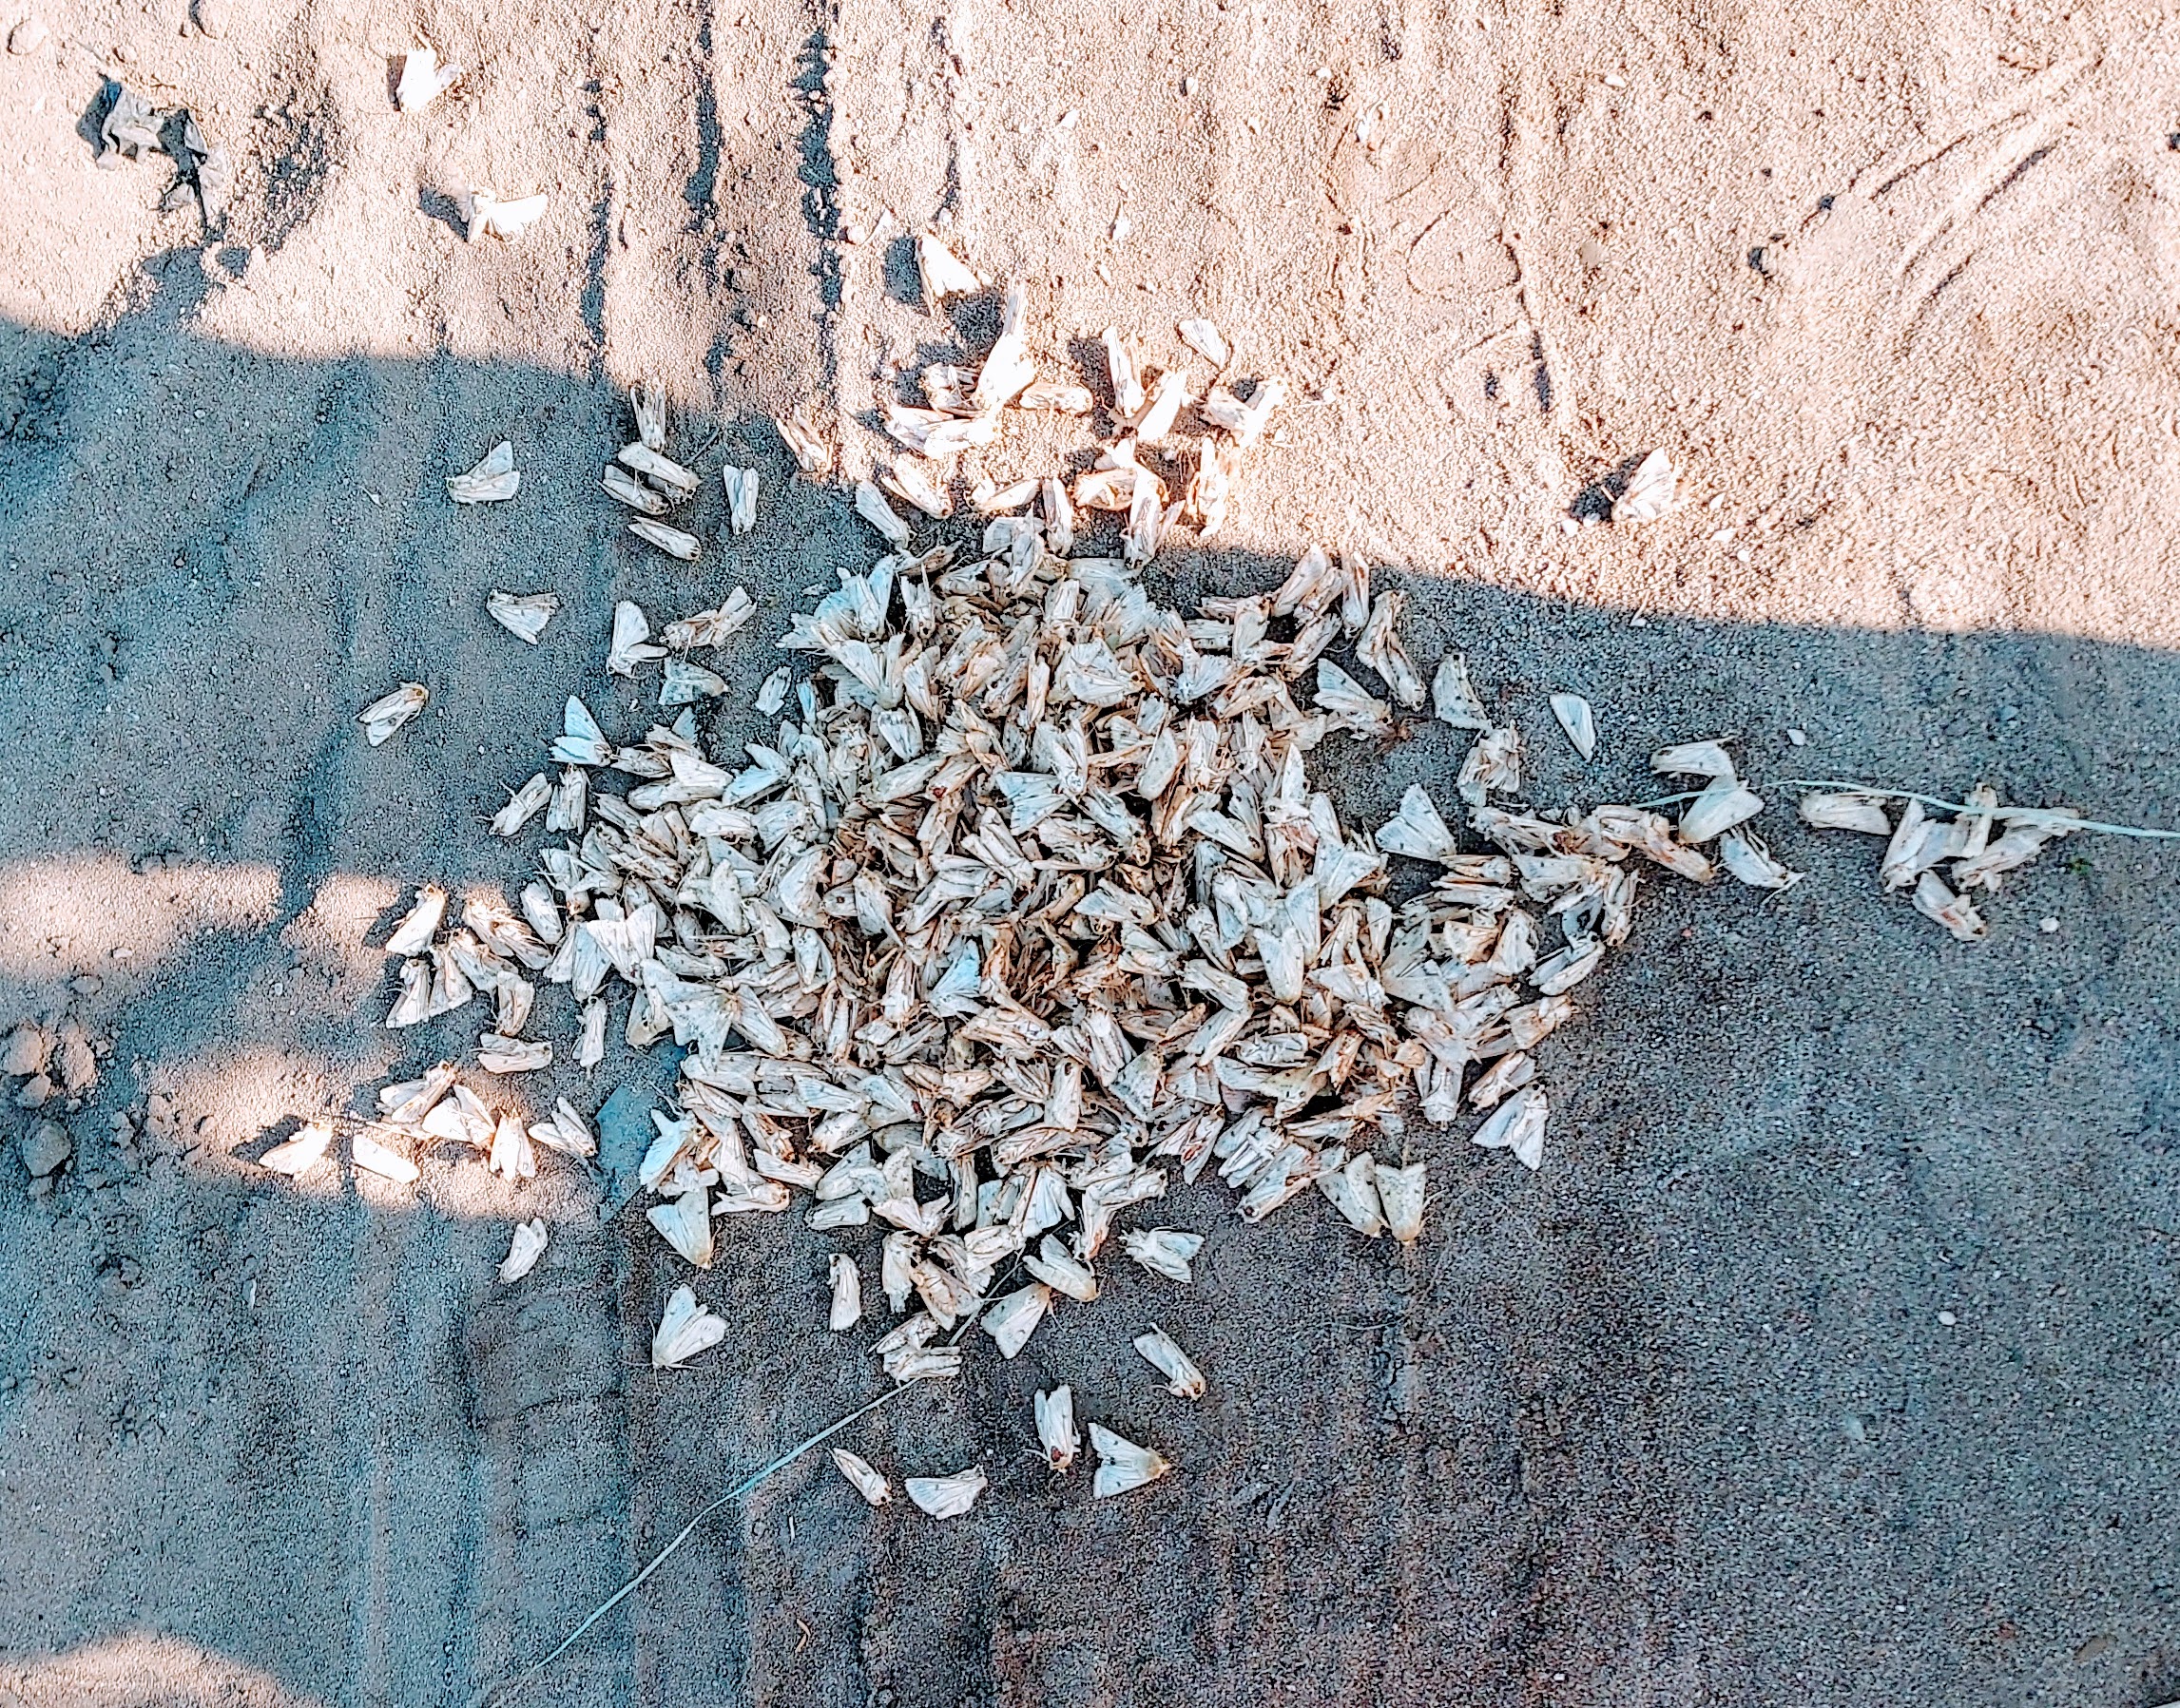 A pile of dead corn earworm moths on the ground